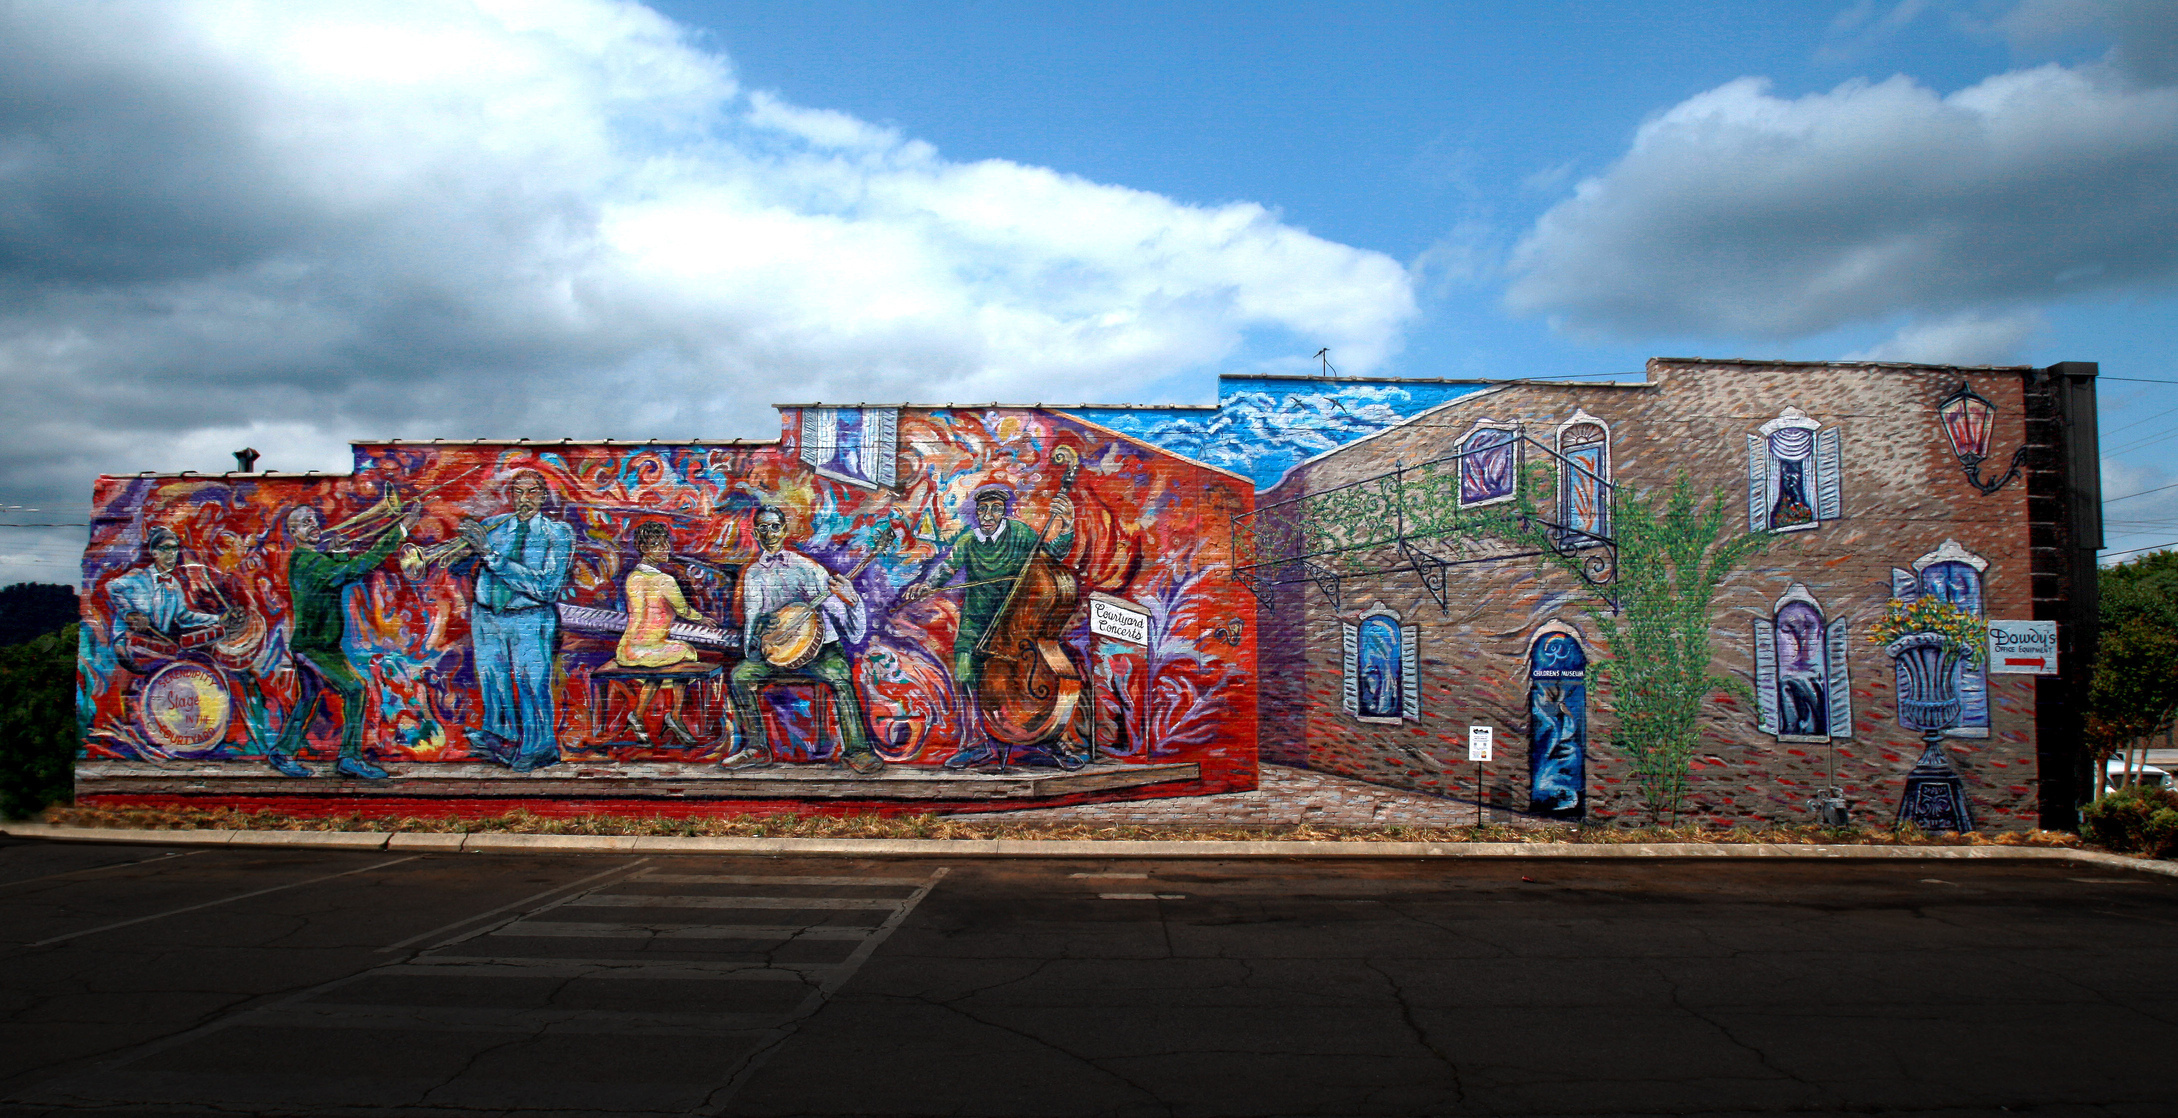 Wall mural called The Serendipity Club, Etowah County by Joseph Giri in 2012